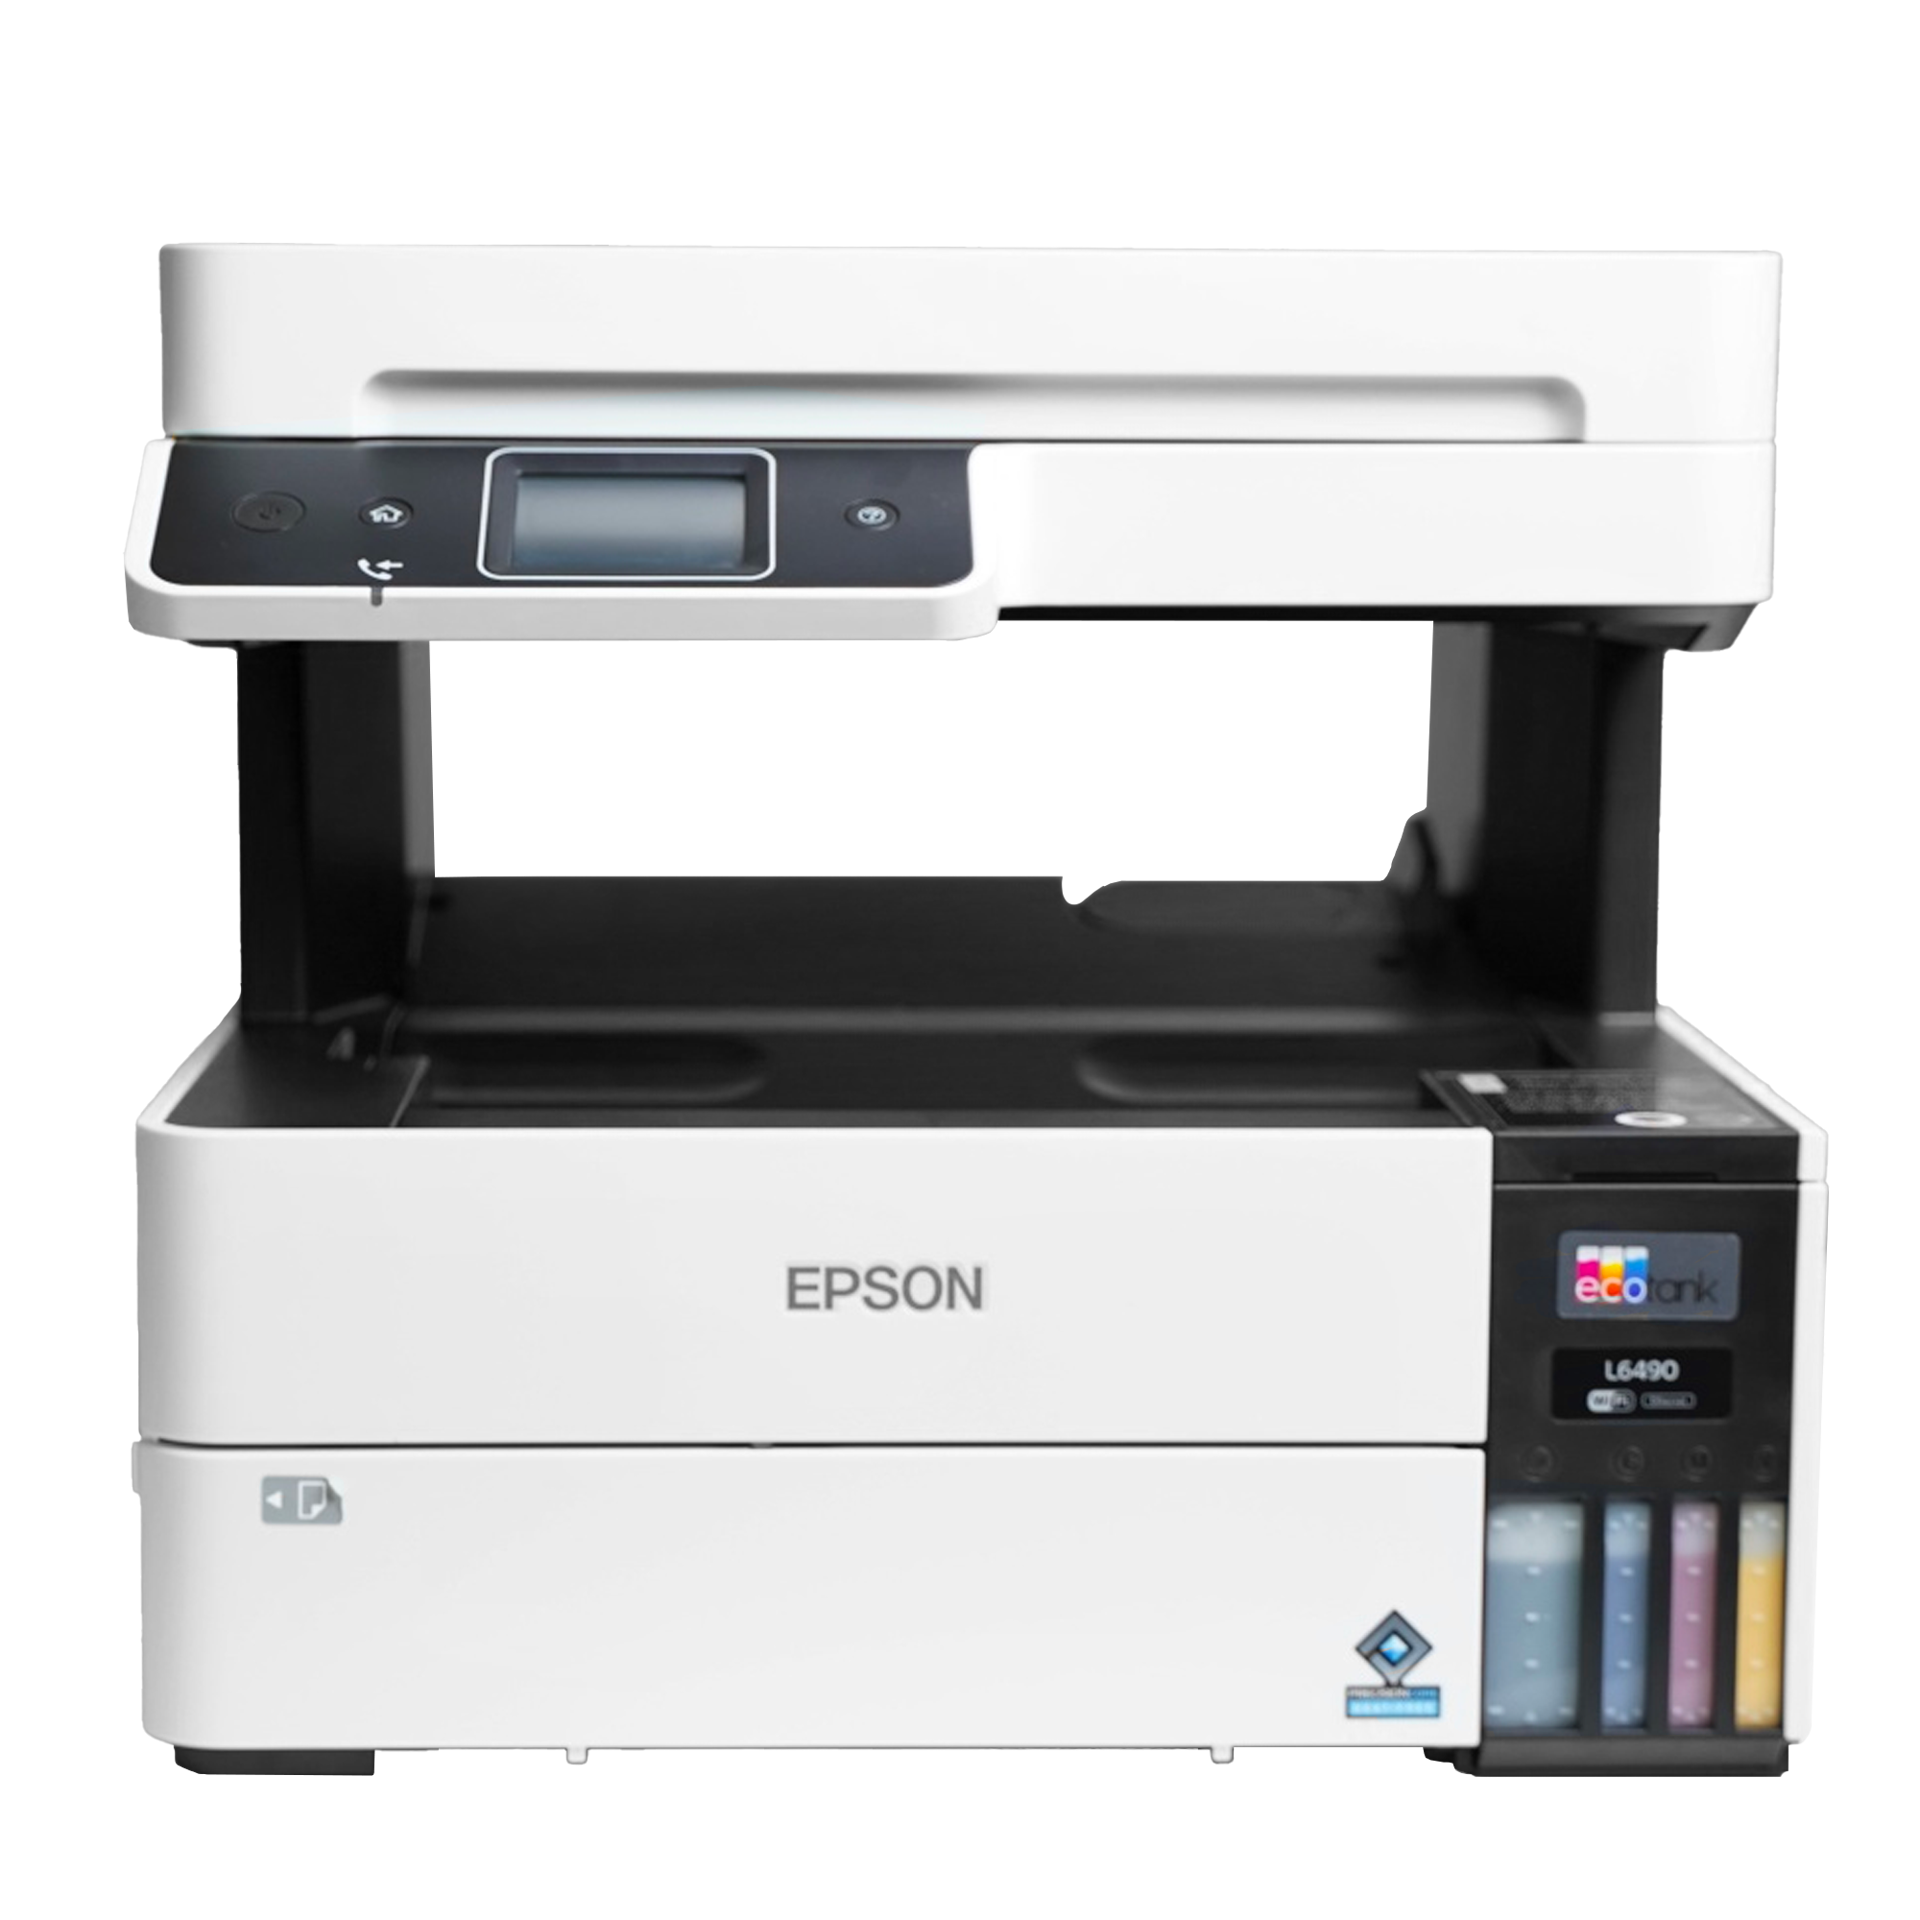 Epson L6490 Printer Nutnull Pc Computer Store In Gensan 8542